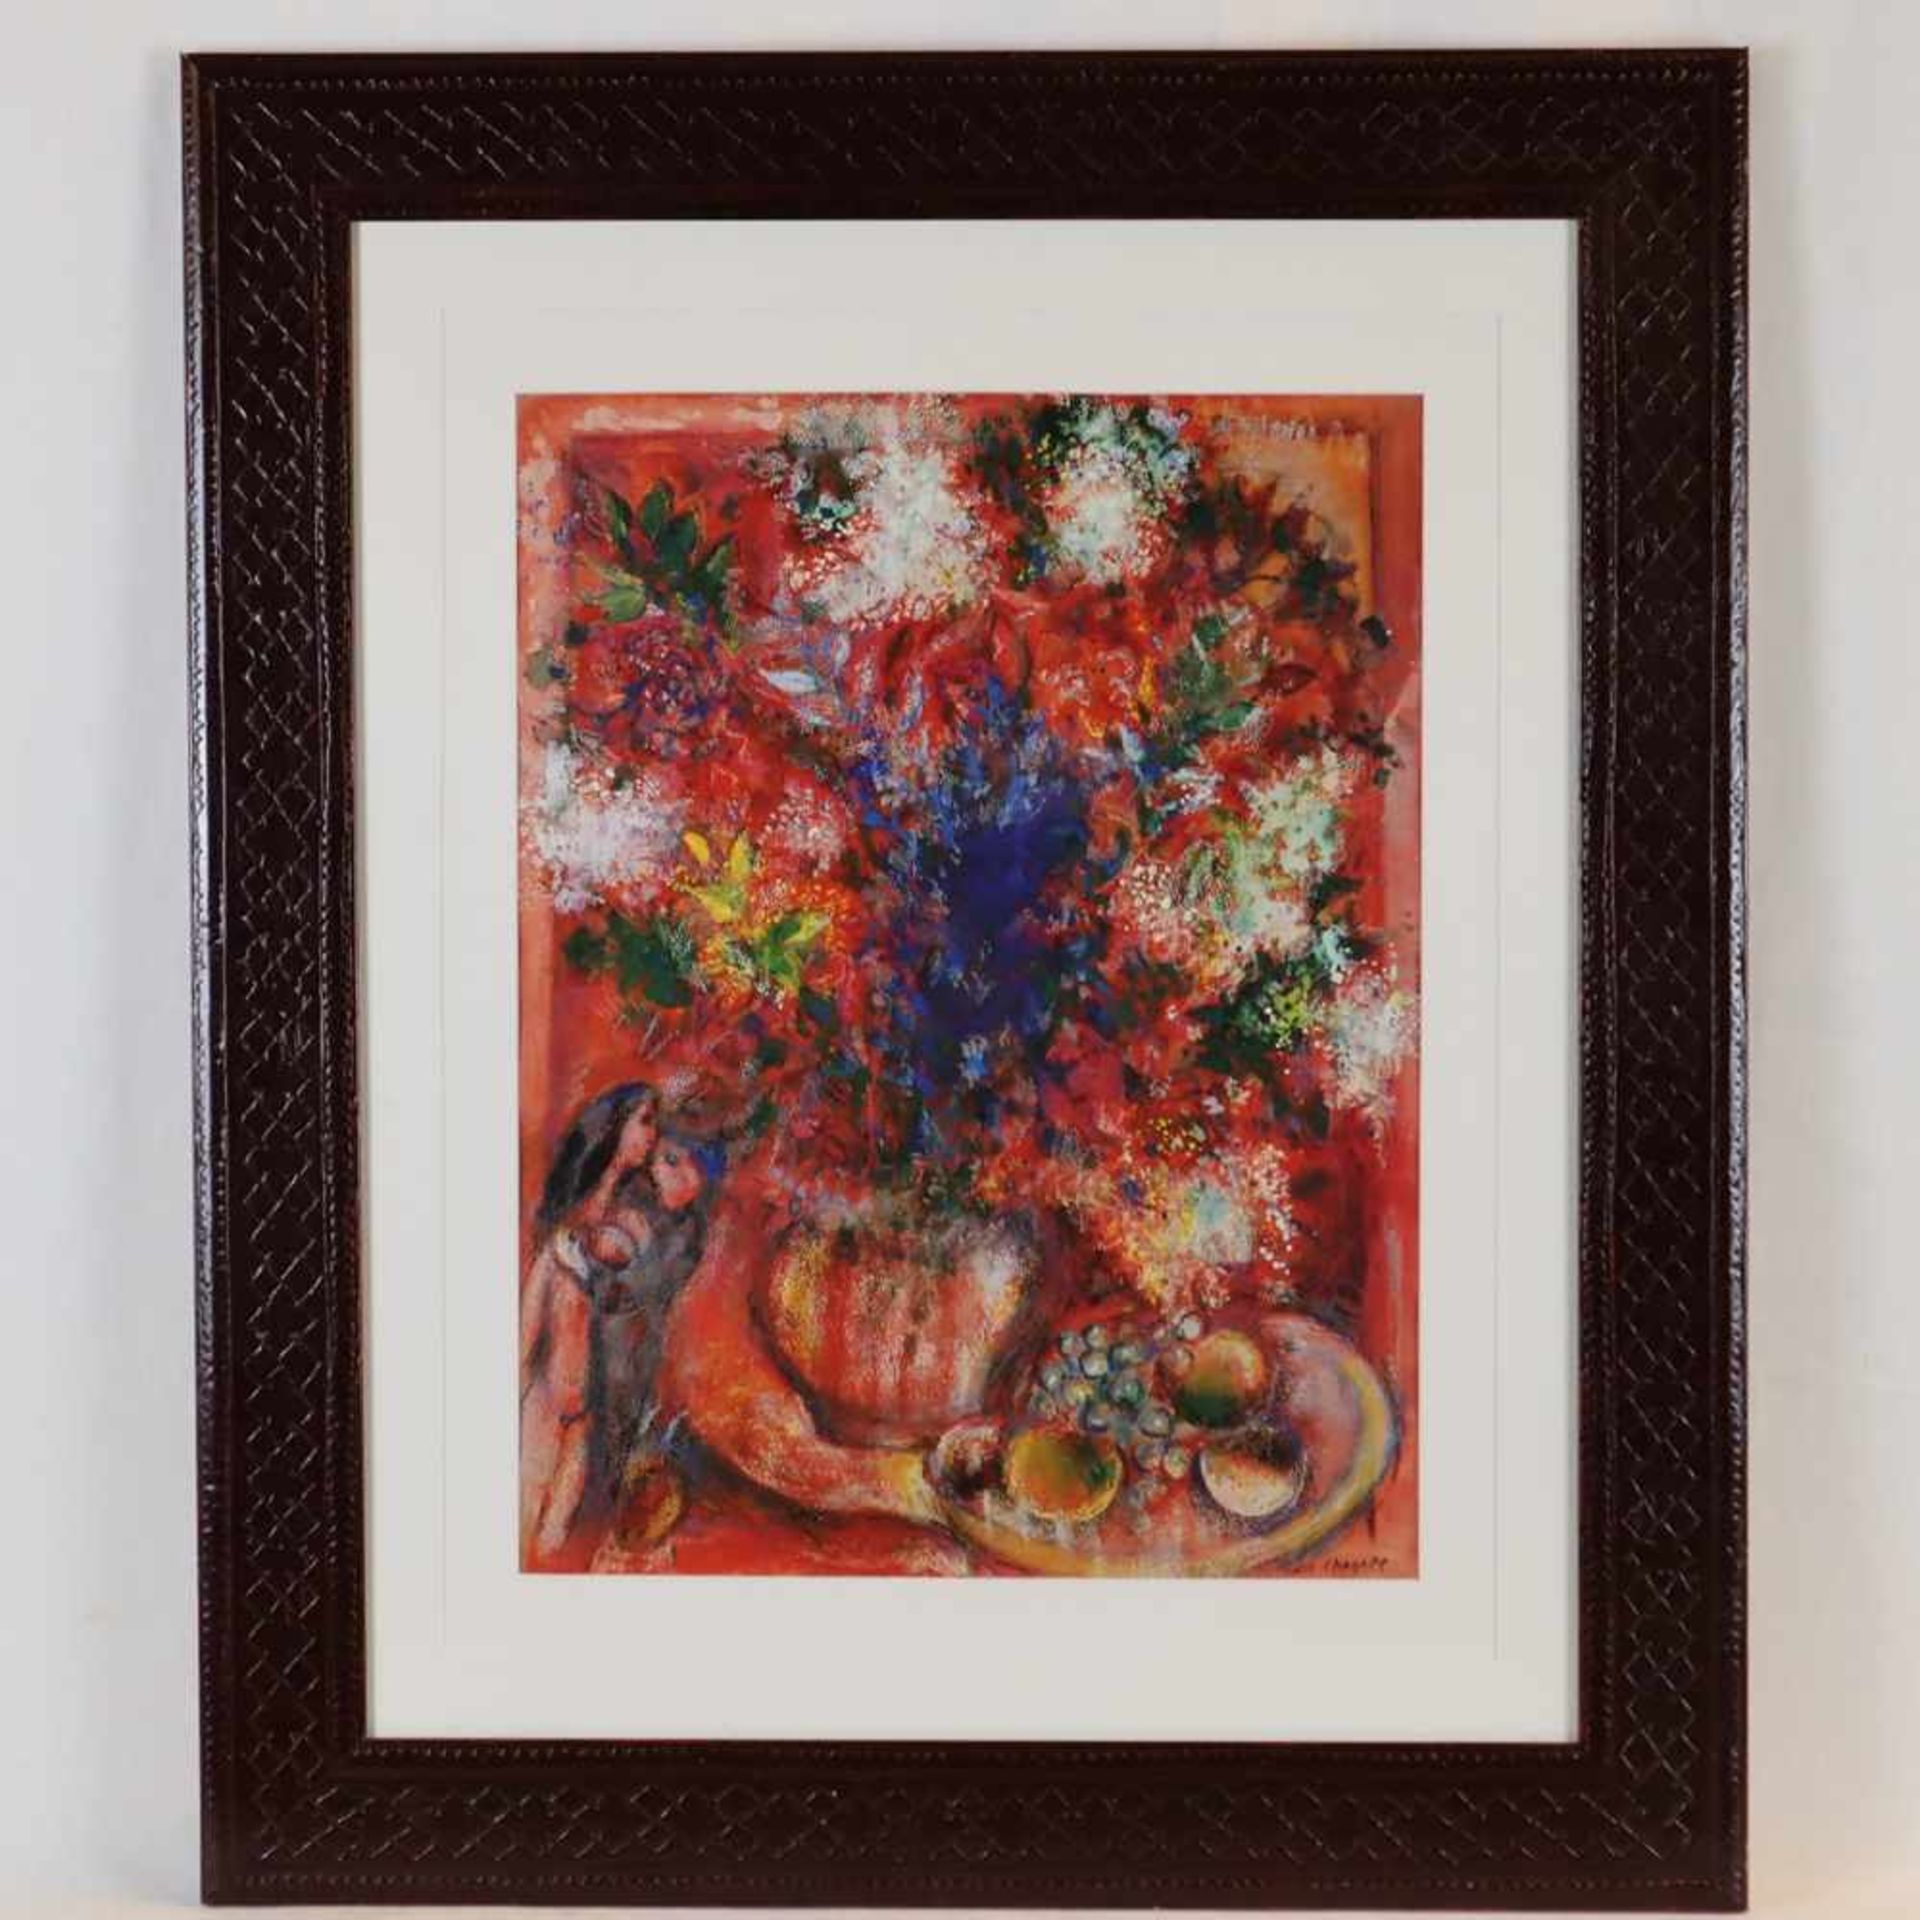 Chagall, Marc (1887 Witebsk - 1985 St. Paul de Vence) - "Die roten Blumen", Farboffsetdruck, unten